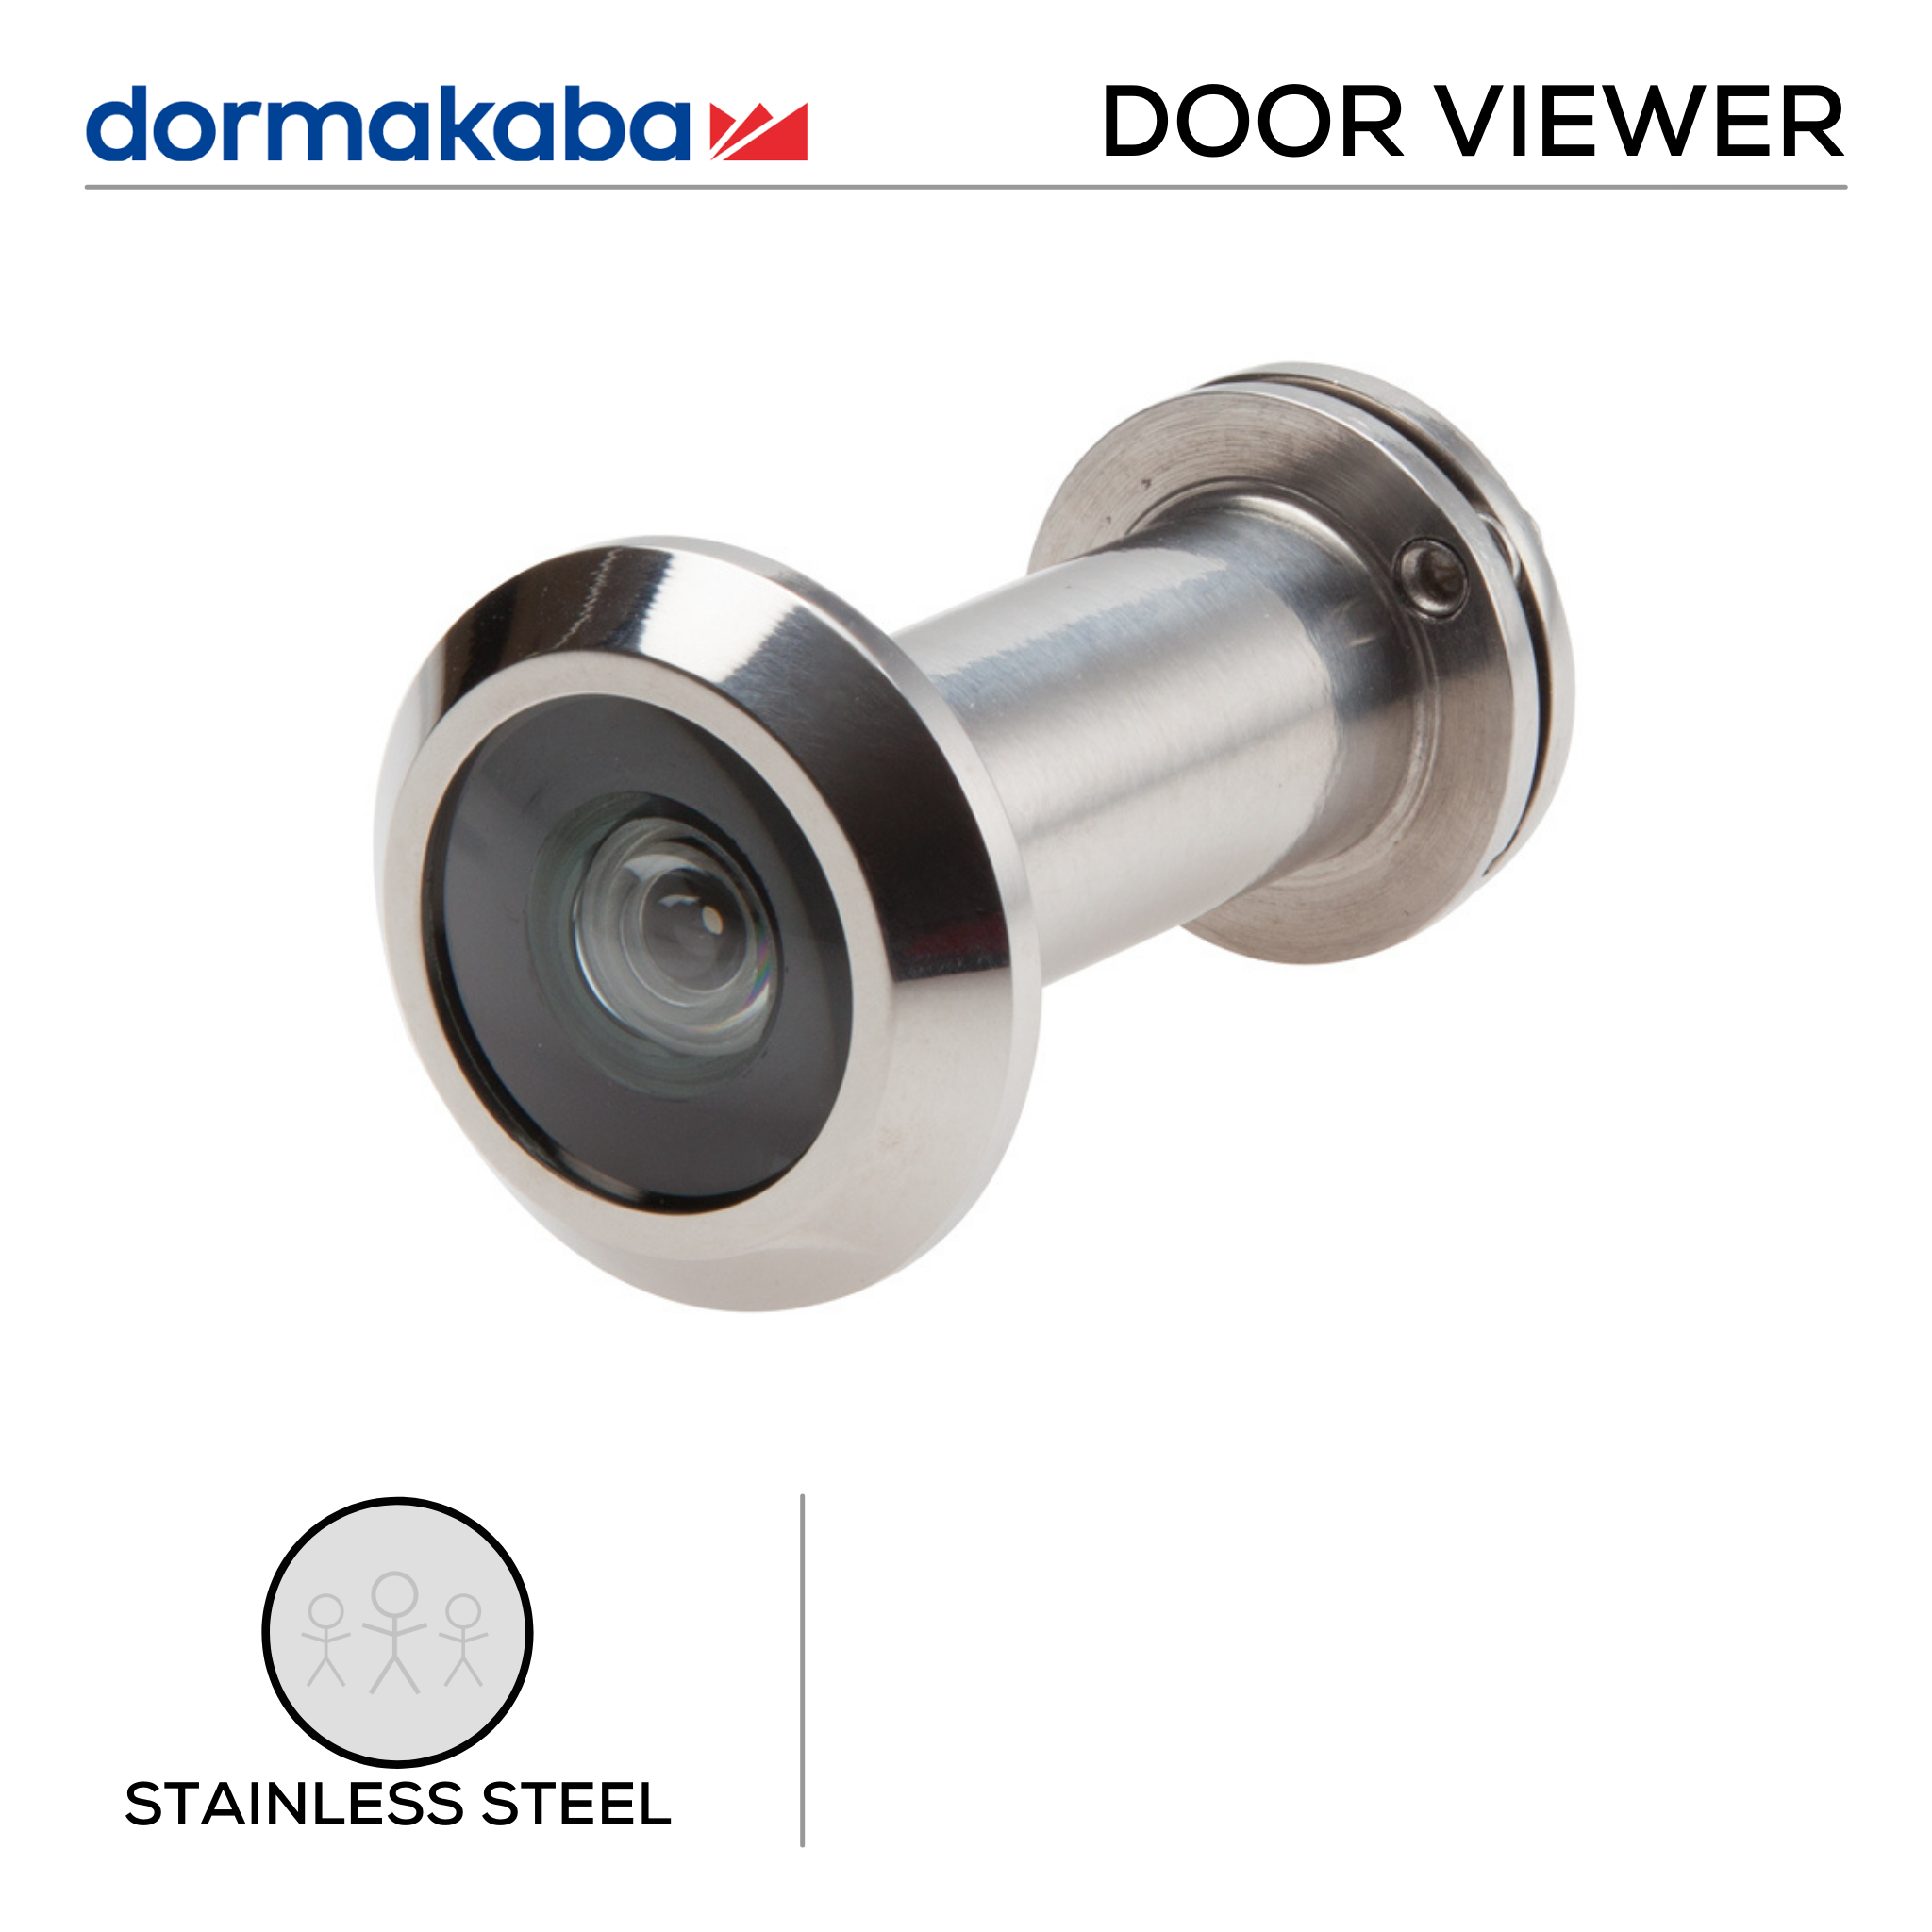 DDV-SS-033, Door Viewer, 34-55mm (l) x 30mm (Ø), Stainless Steel, DORMAKABA